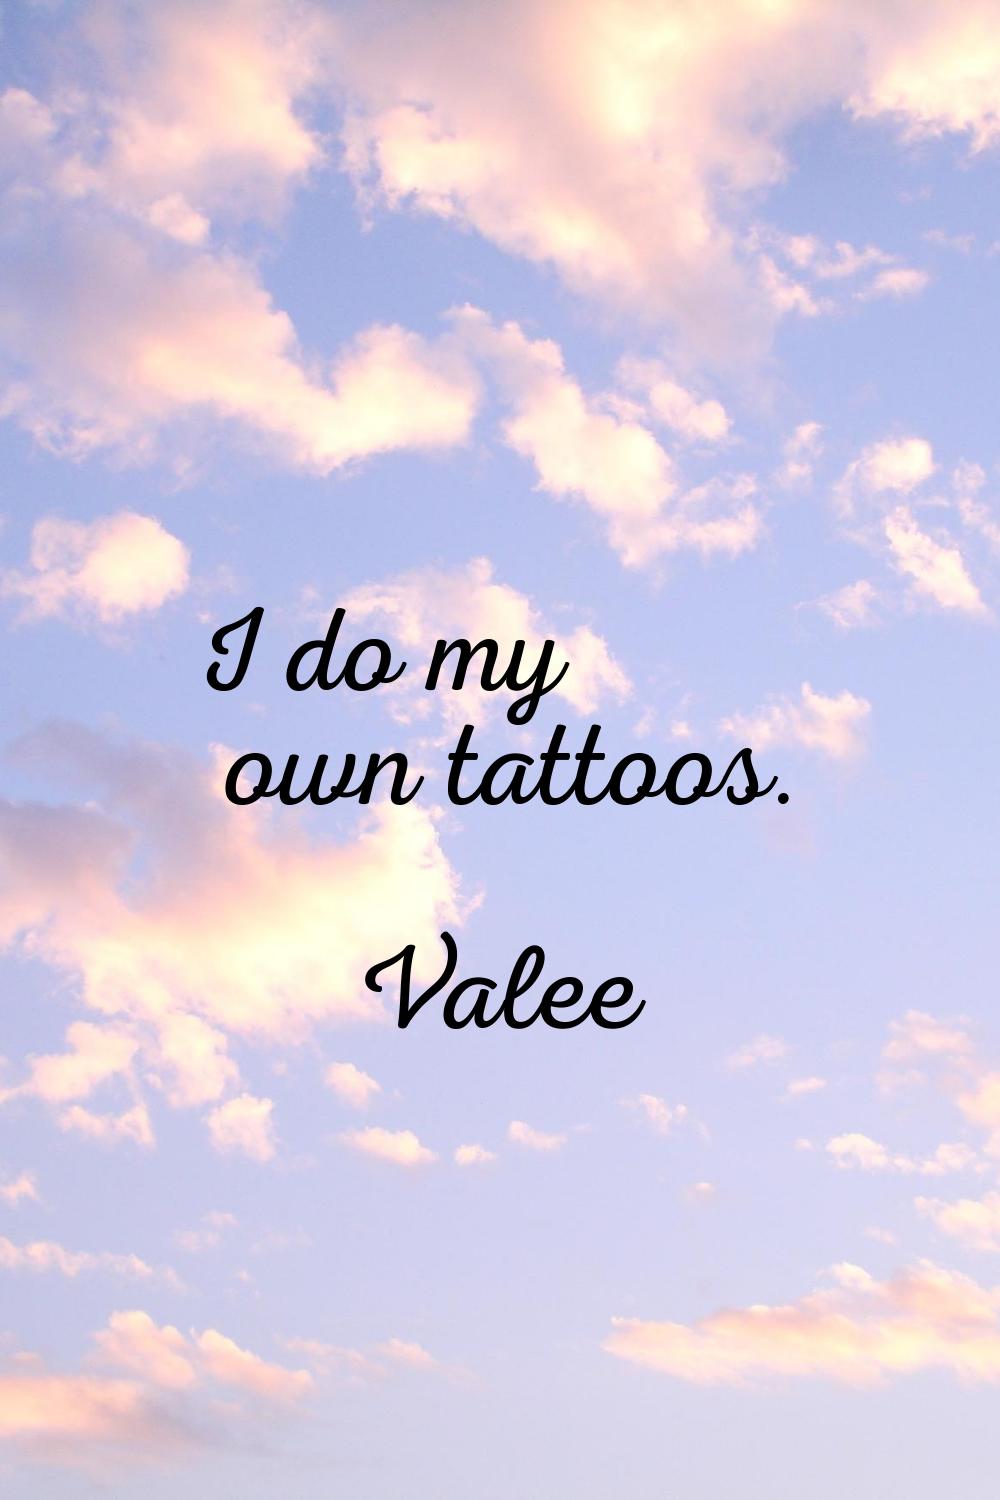 I do my own tattoos.